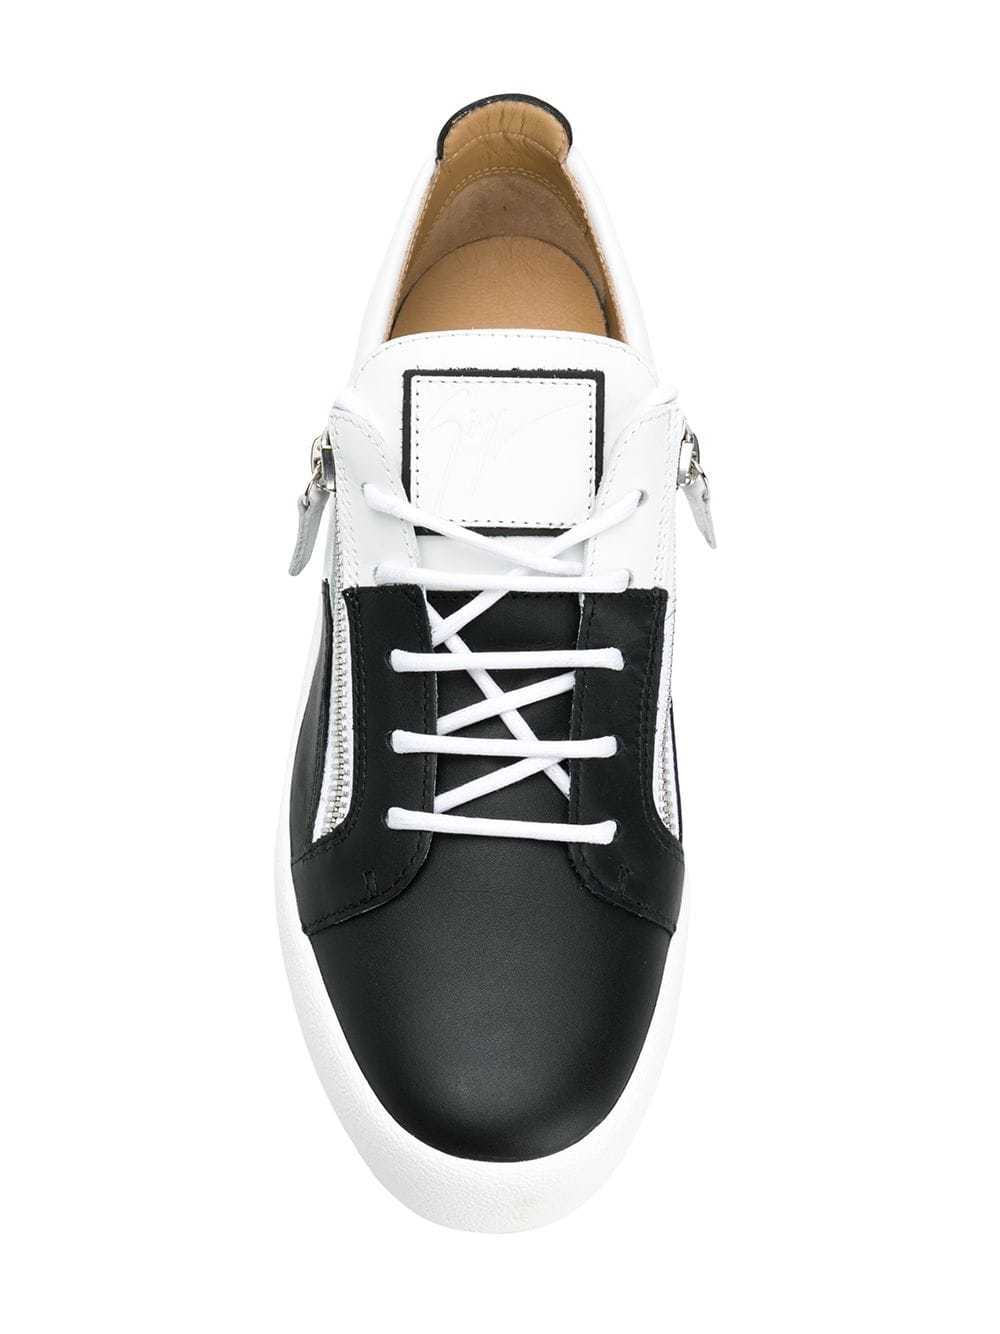 Giuseppe Zanotti Design Frankie Signature Sneakers, $590 | farfetch.com ...